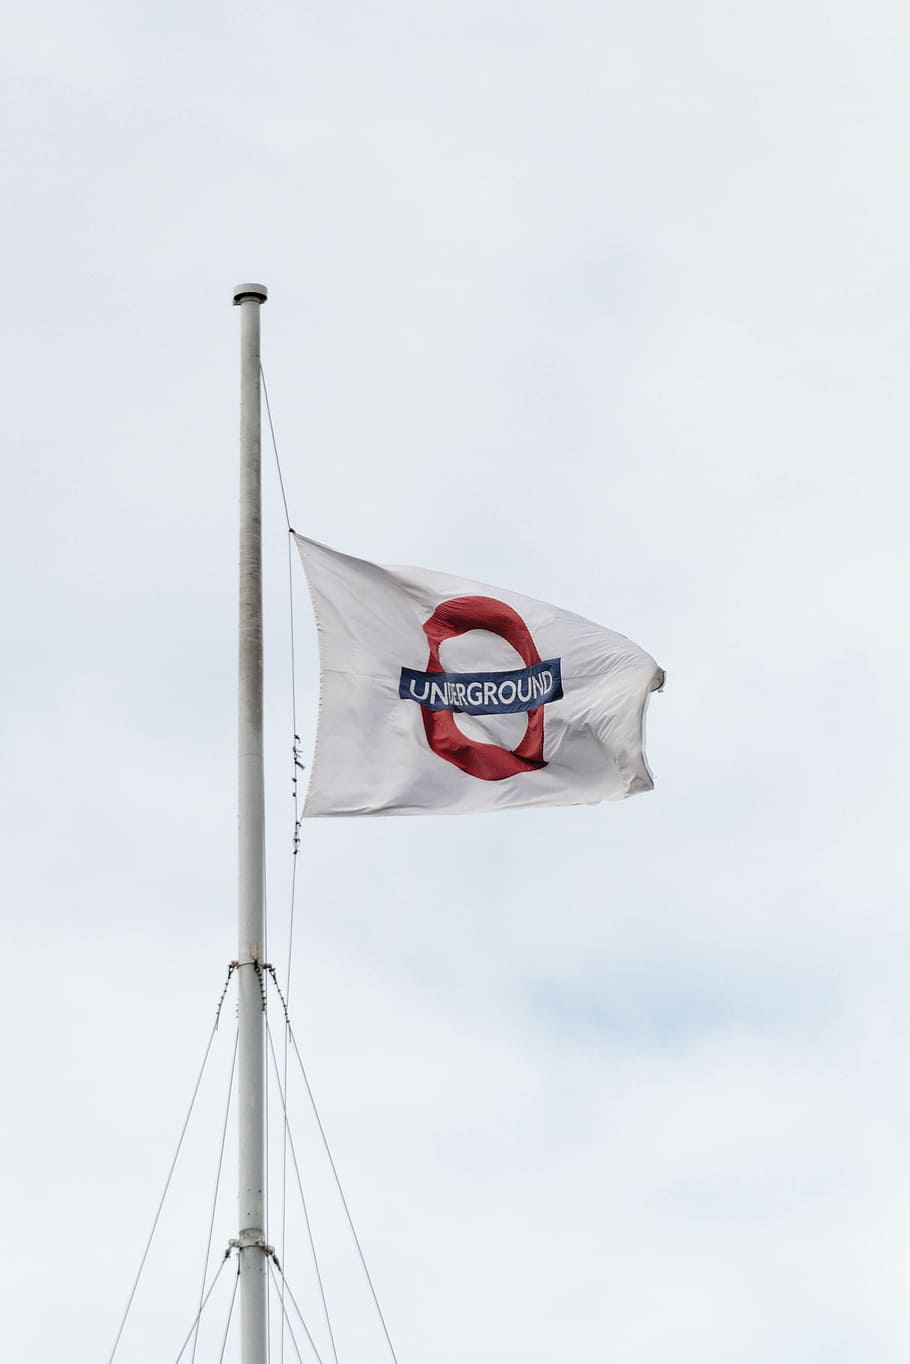 london, united, kingdom, -, august, 20, 2017, underground, logo, flying, flags